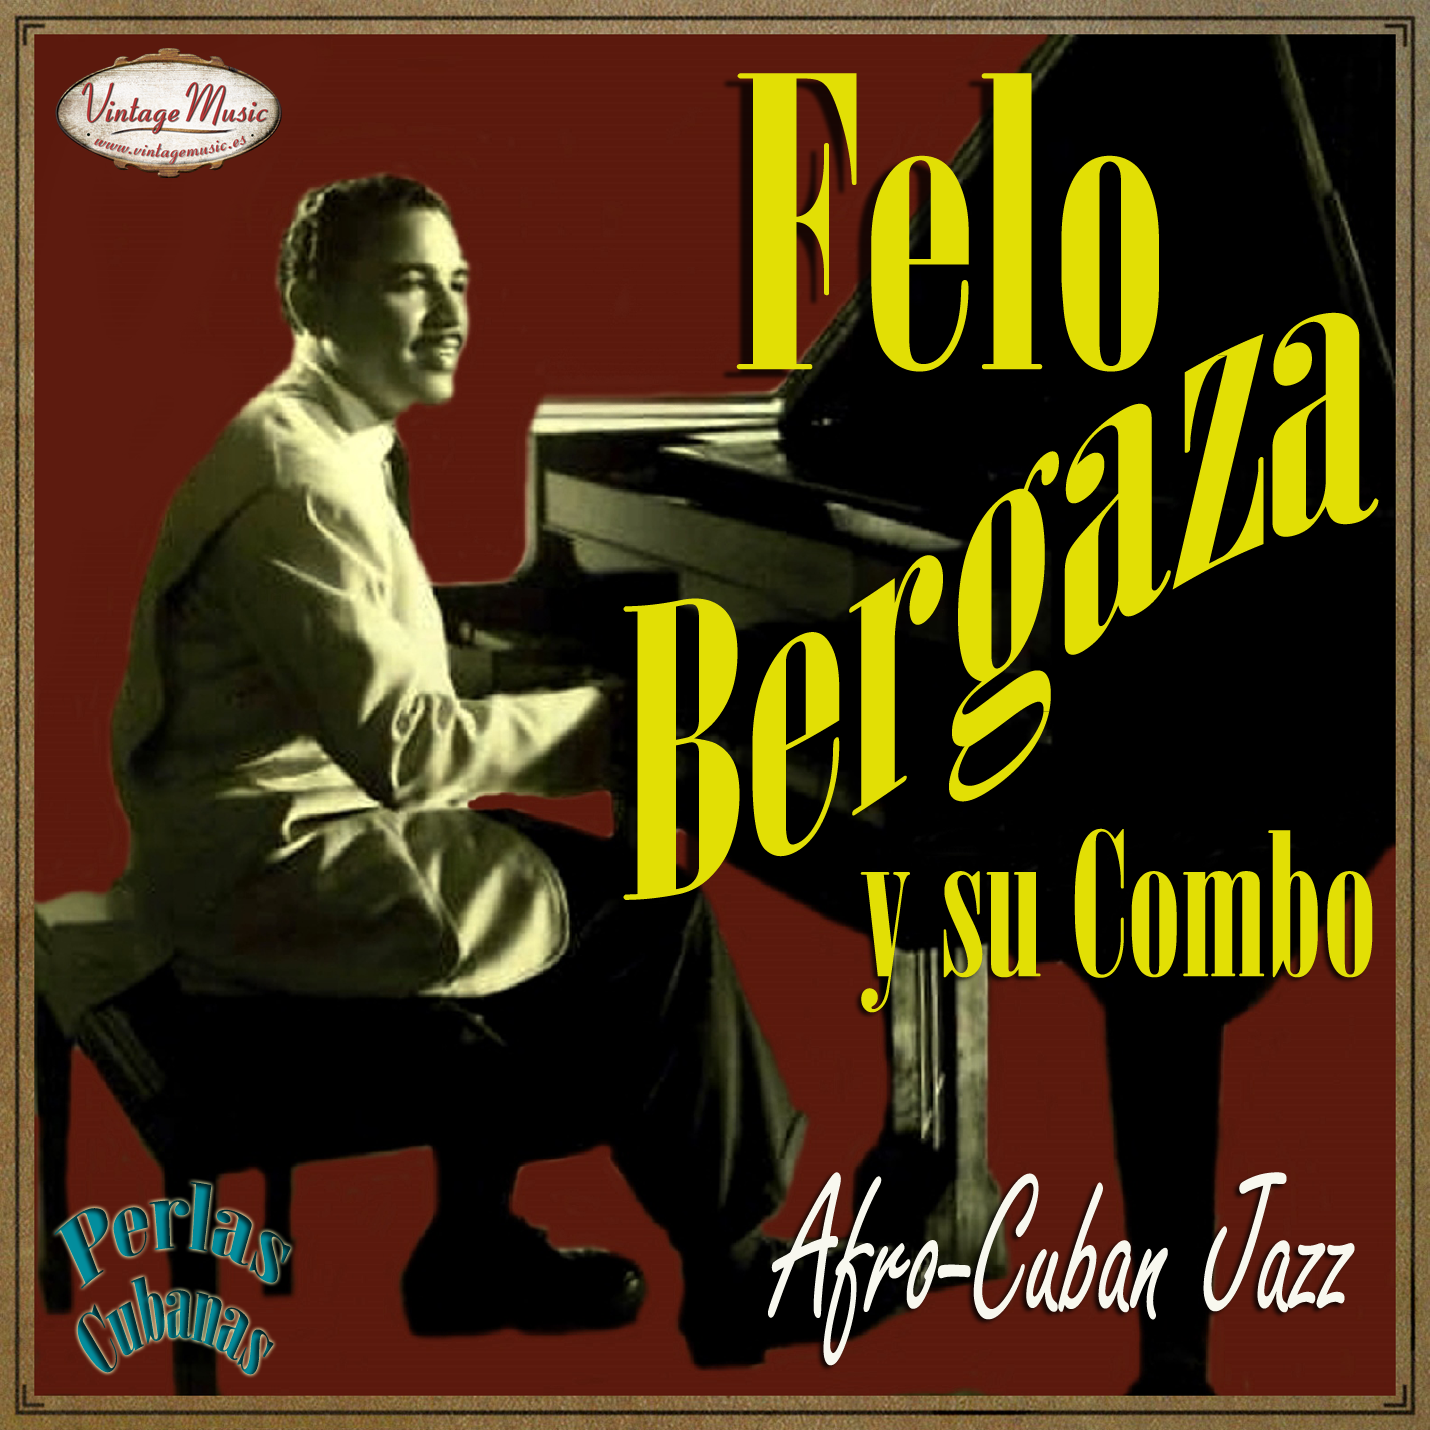 Felo Bergaza (Colección Perlas Cubanas - #113)